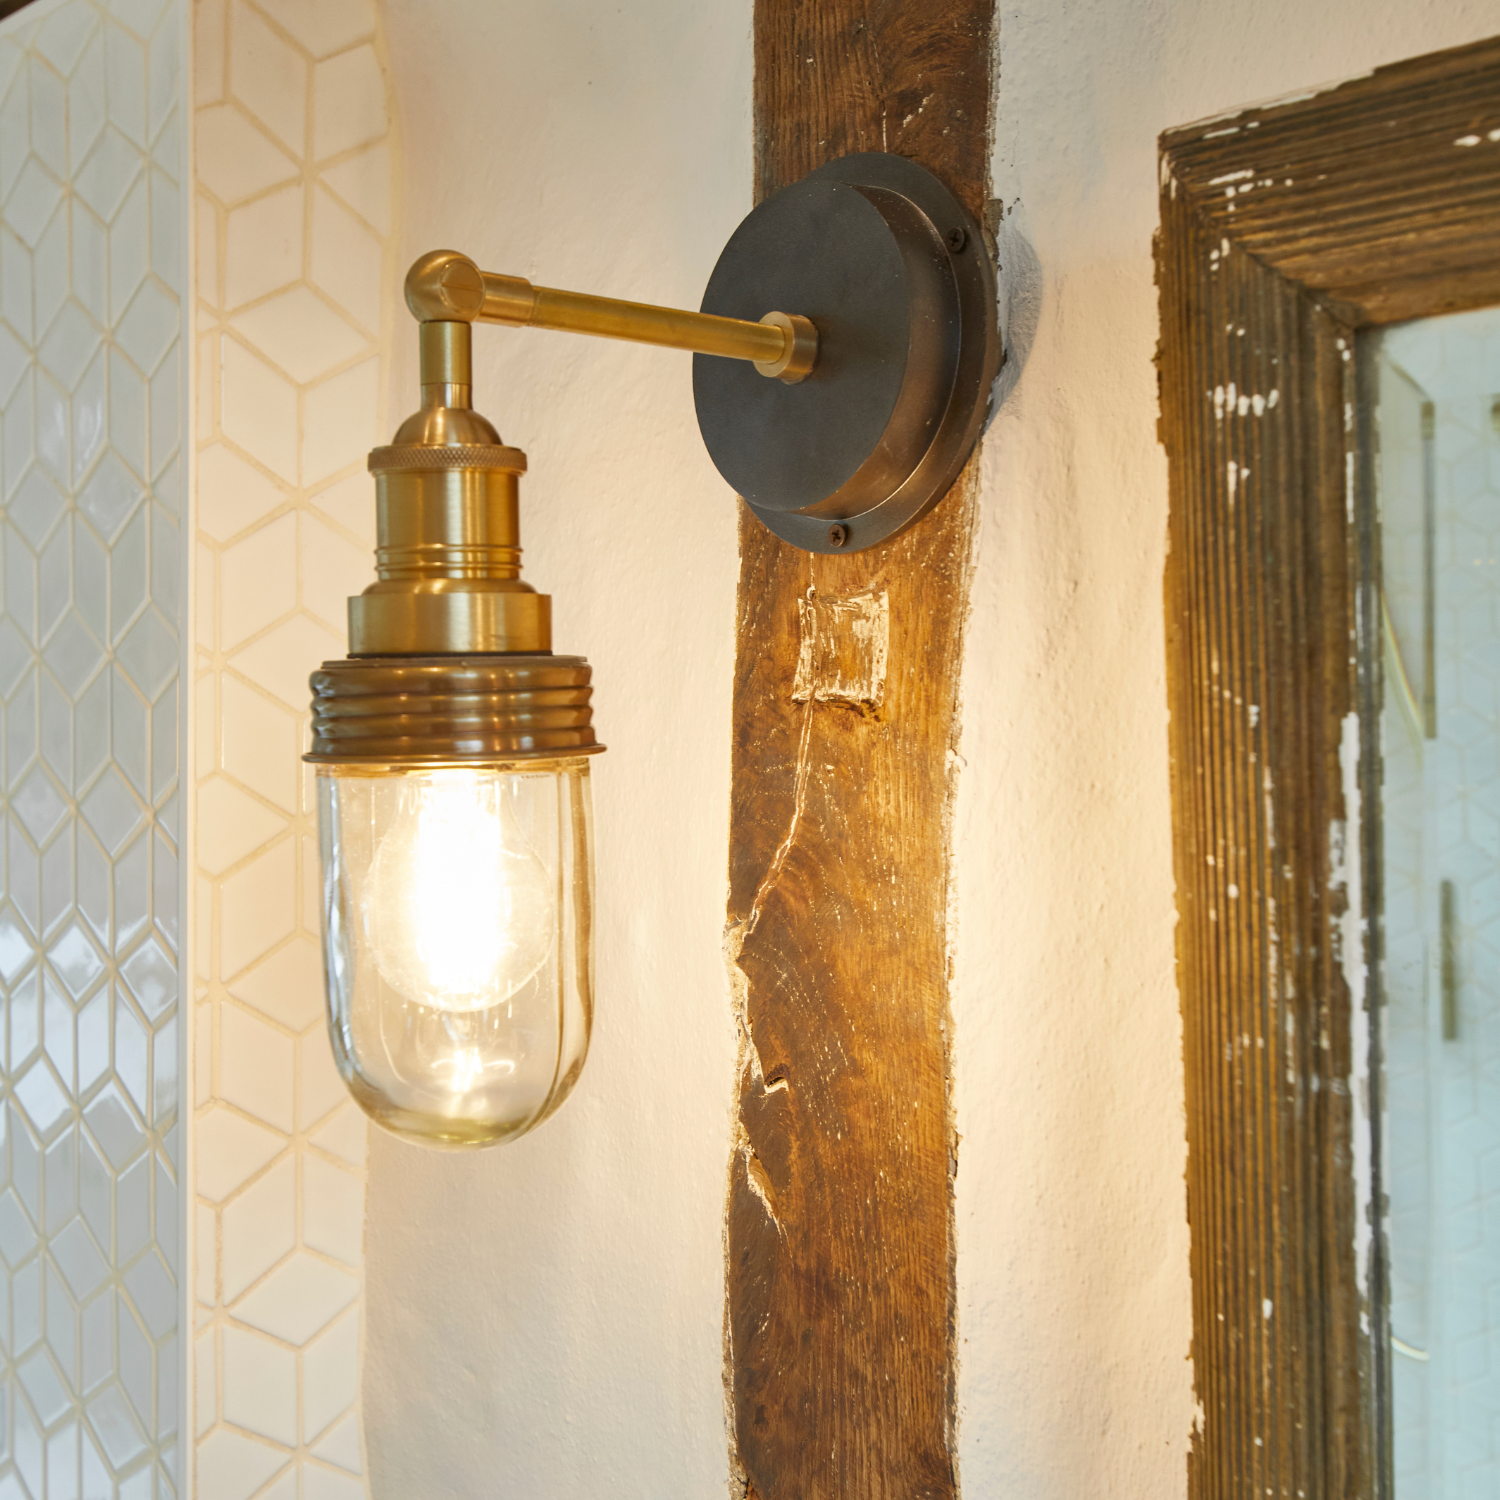 A Brooklyn bathroom wall light in a bathroom with rustic wooden details